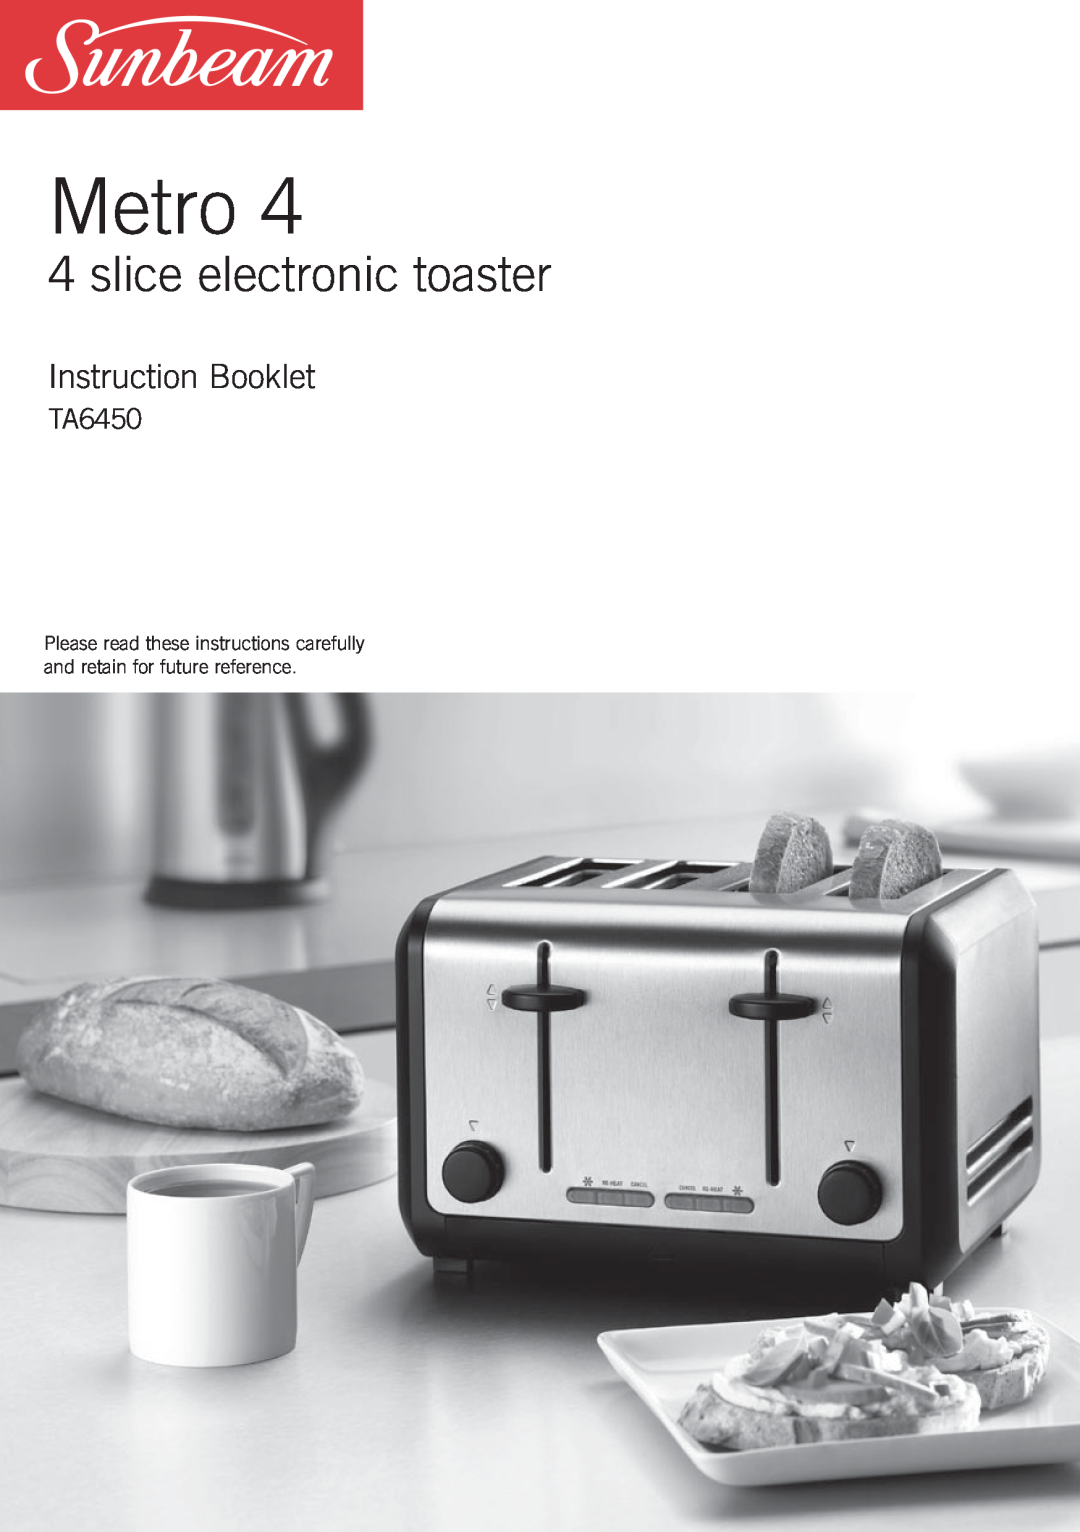 Sunbeam TA6450 manual Metro, slice electronic toaster, Instruction Booklet 